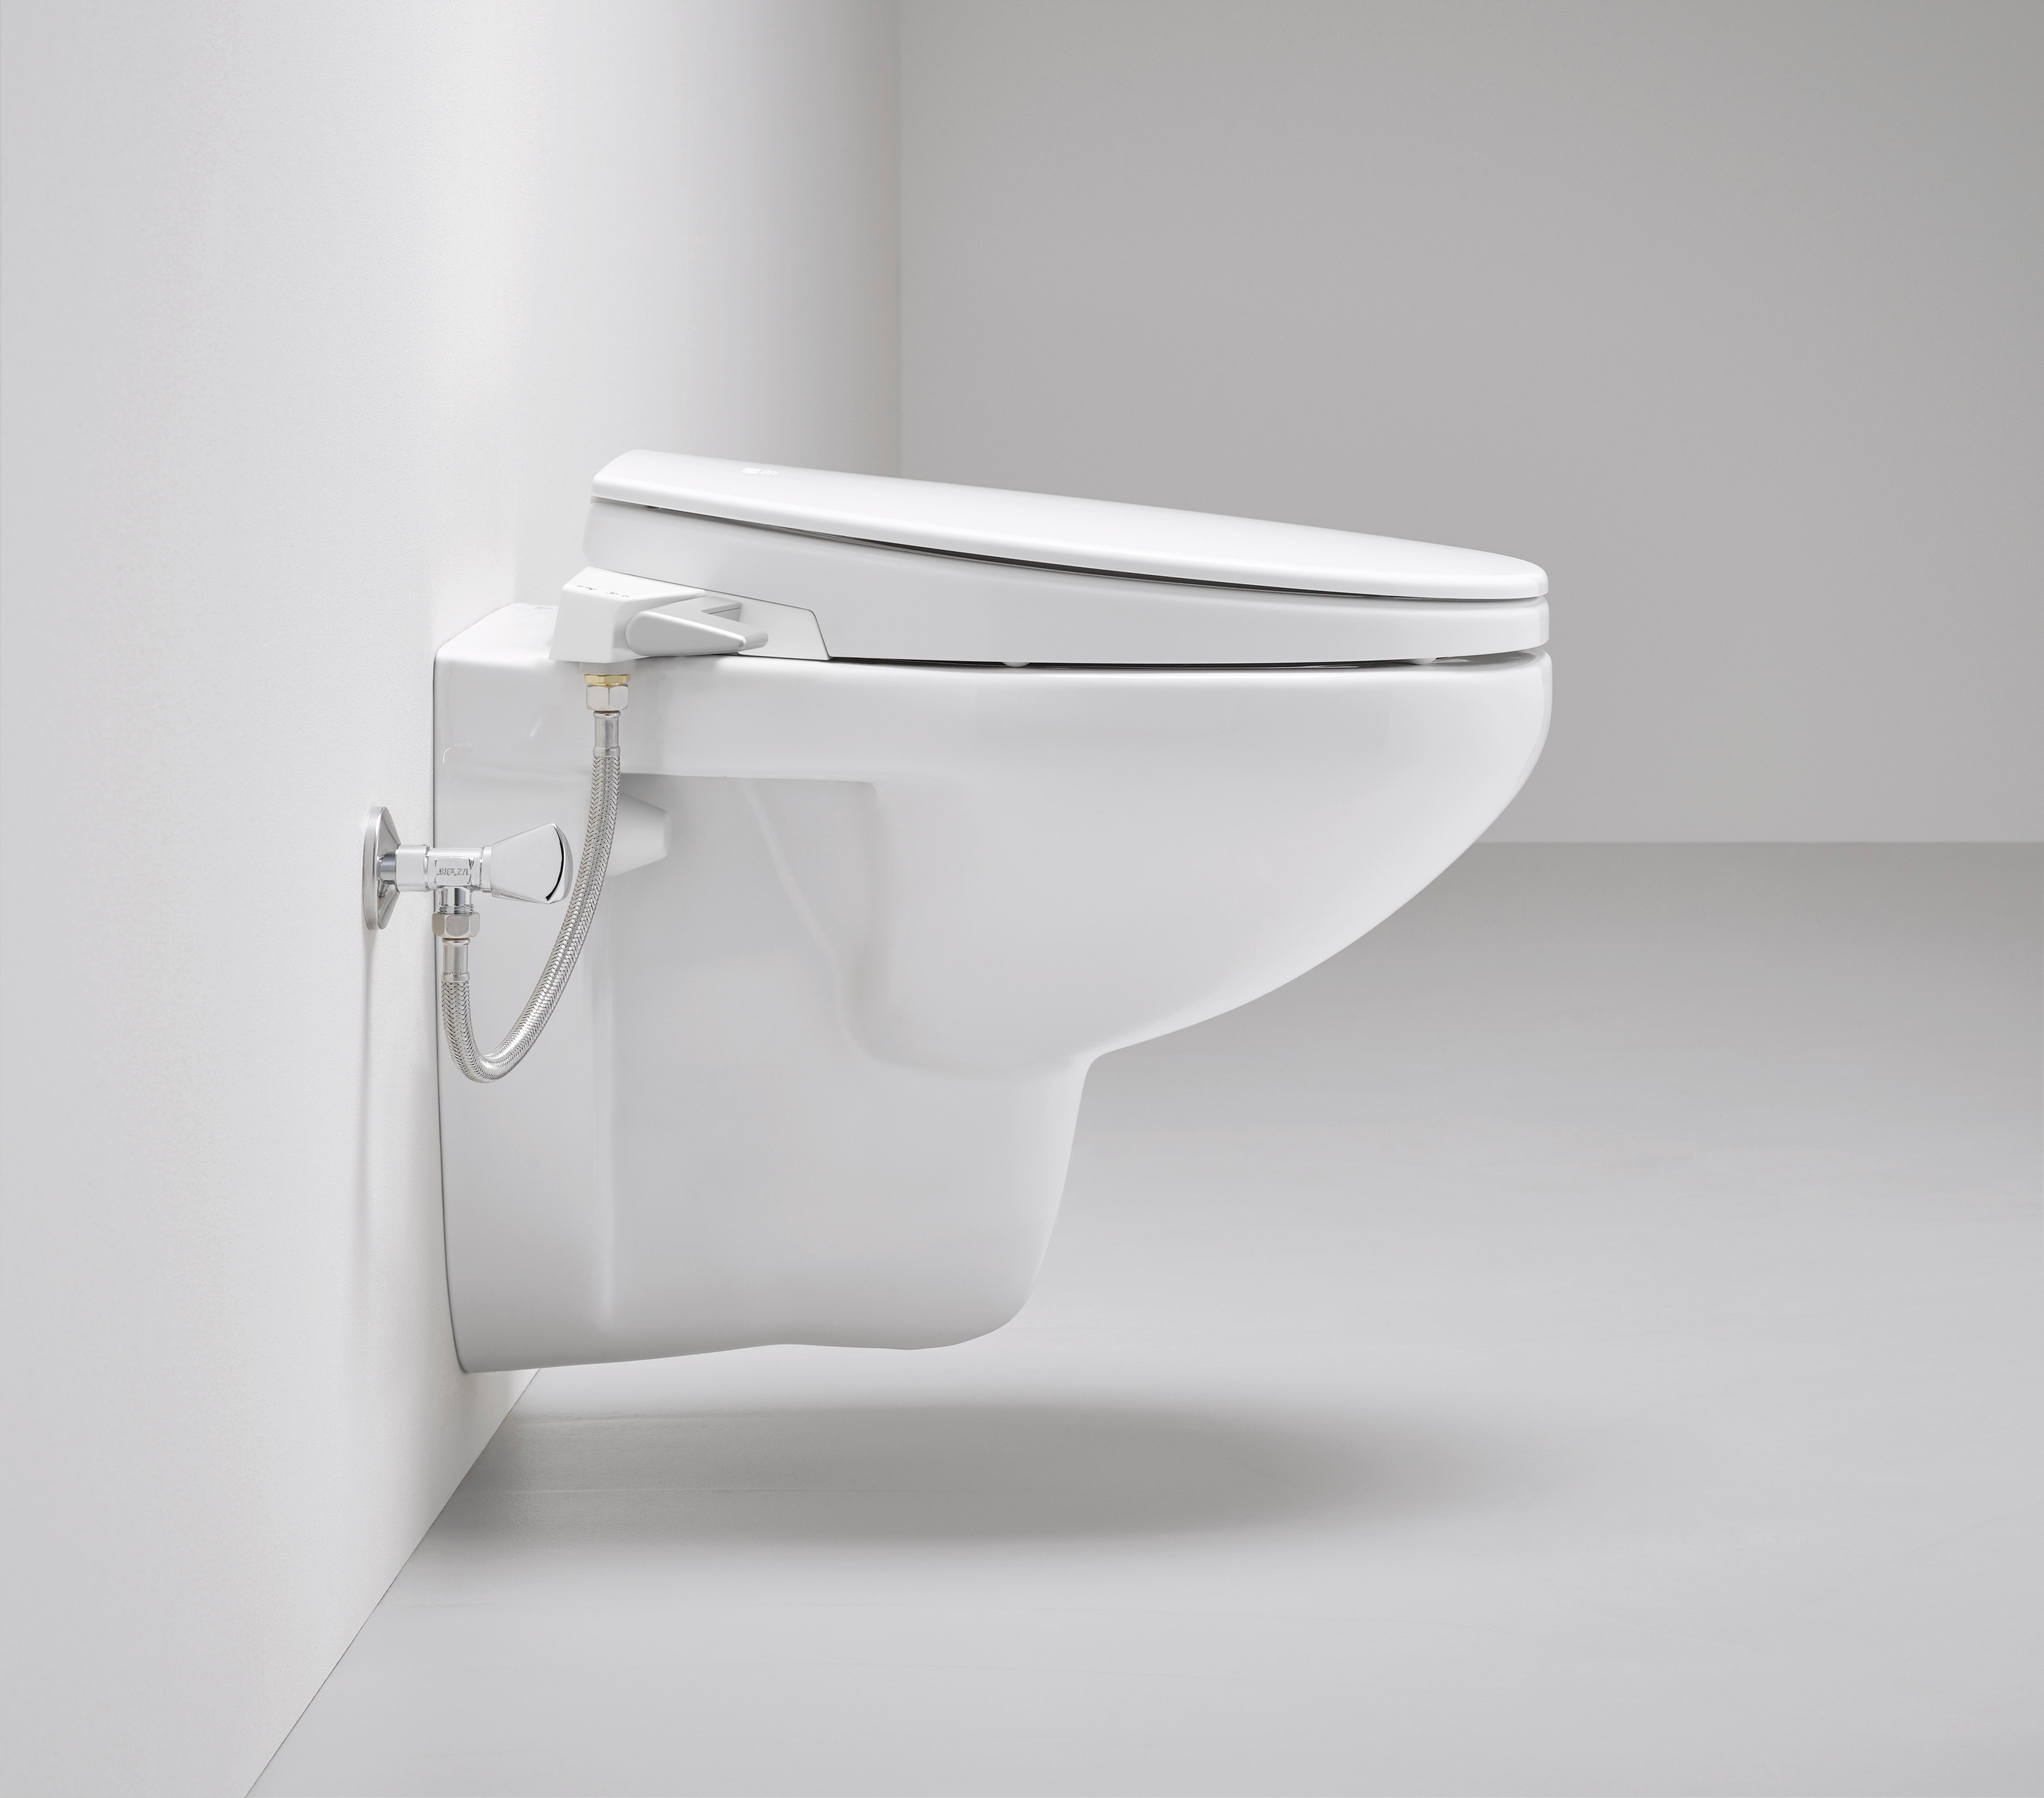 tom Manifold Datum GROHE Manual Bidet Seat: An affordable bathroom upgrade